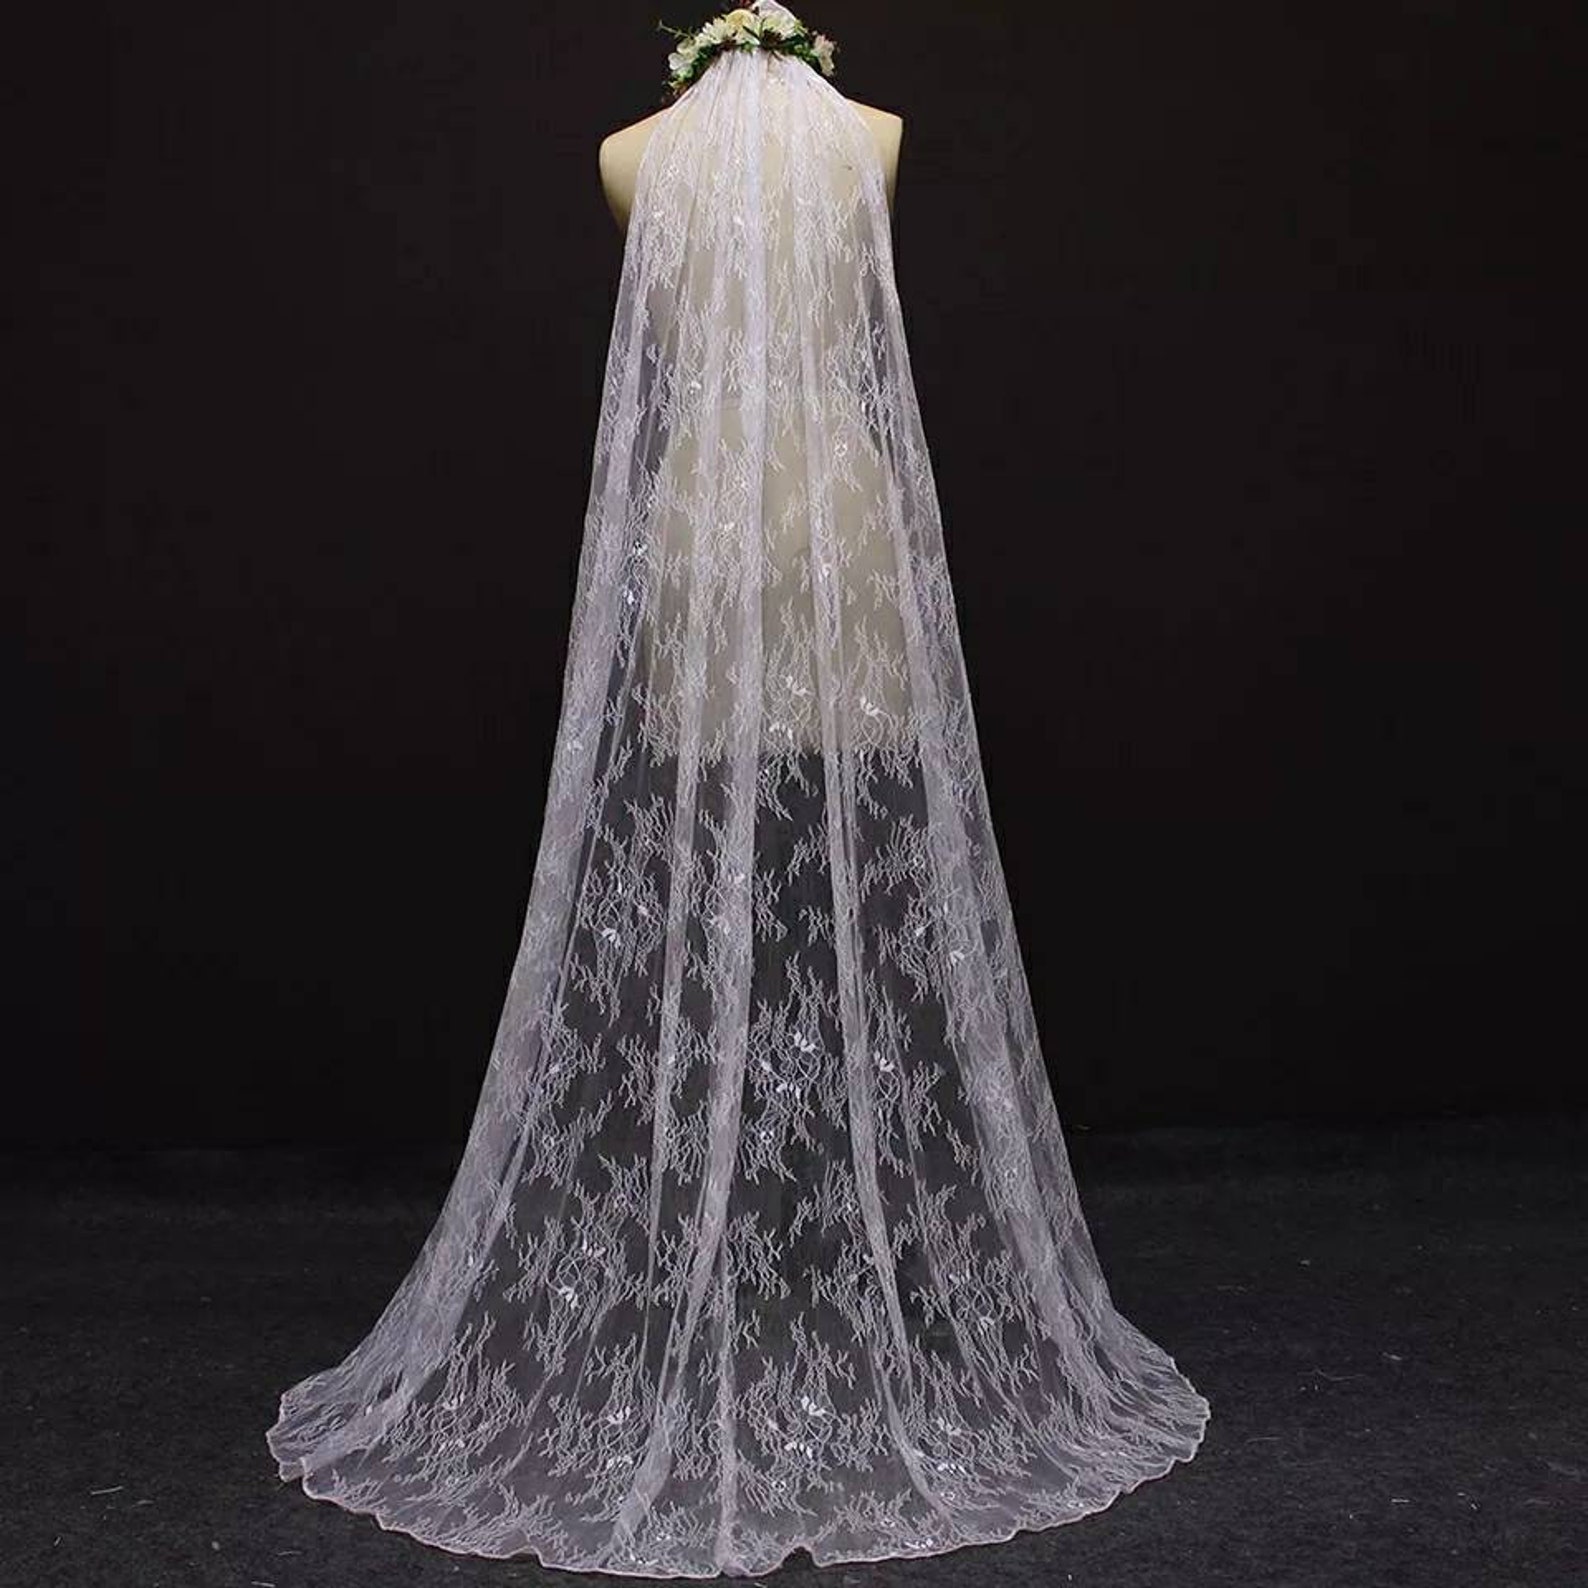 Italian lace wedding veil bridal white or ivory. Real Photos 2 | Etsy